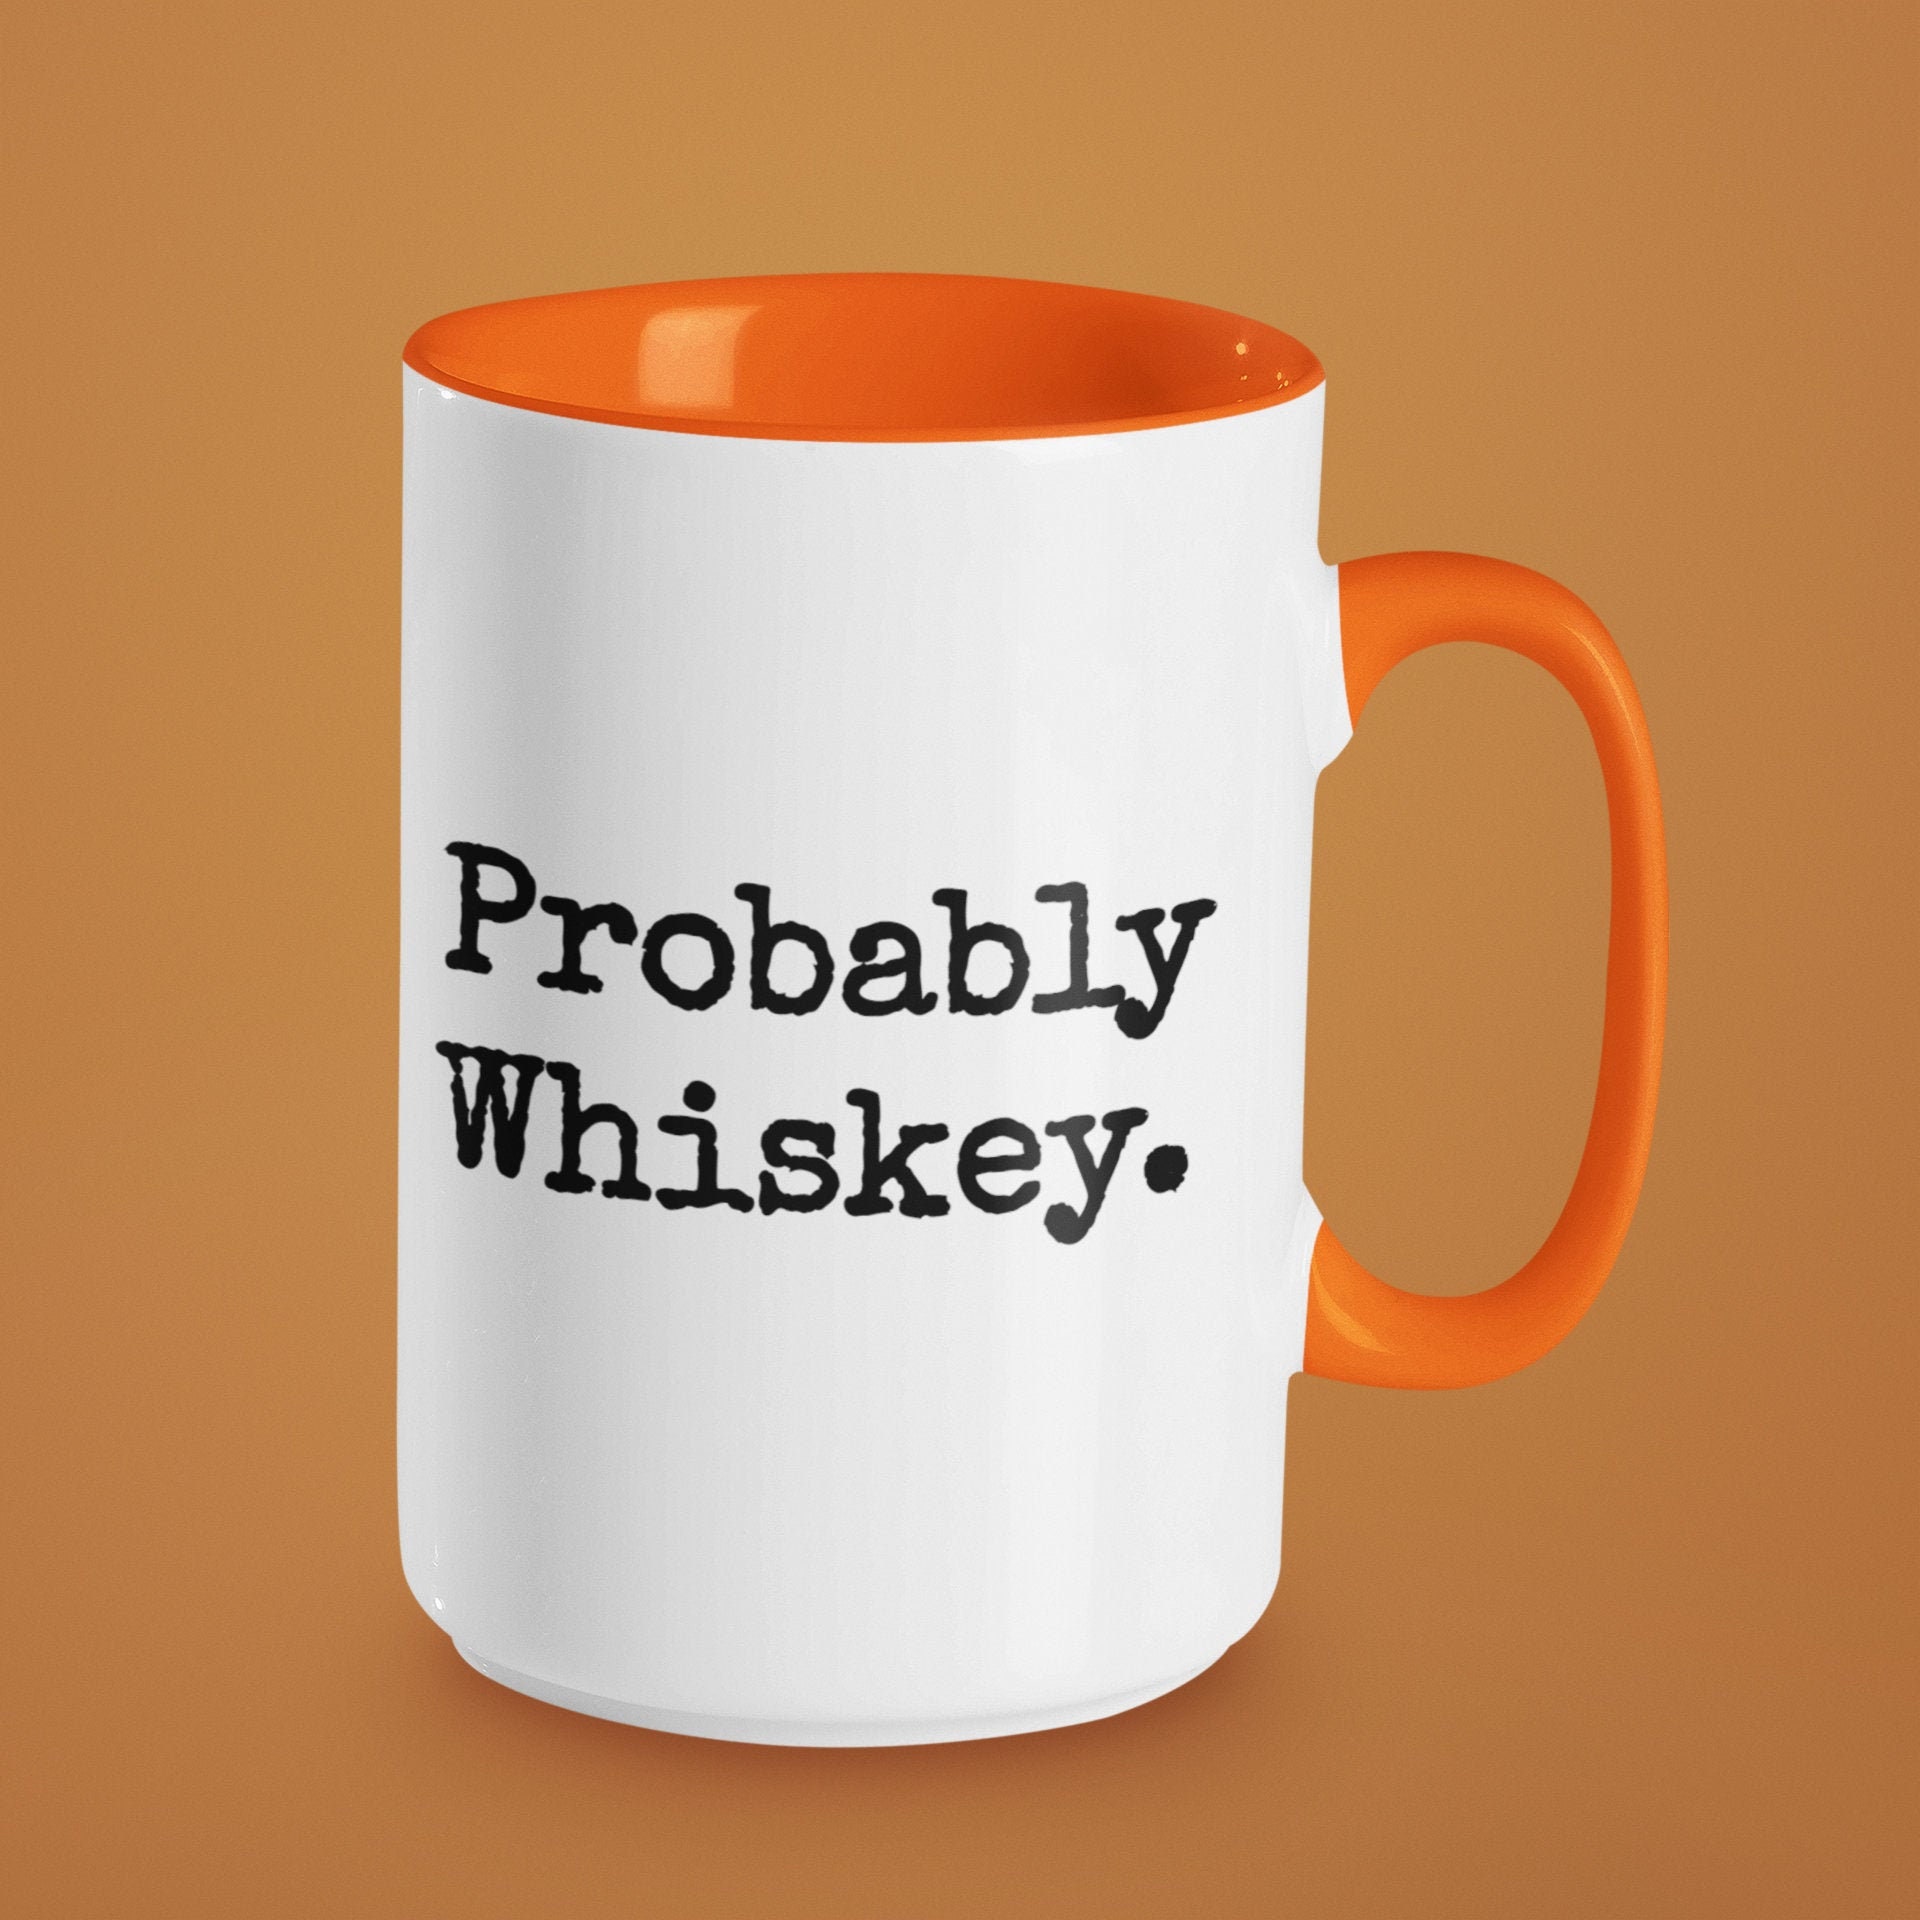 Probably Whiskey Mug. Funny Coffee Mug Gift for Whiskey Lover